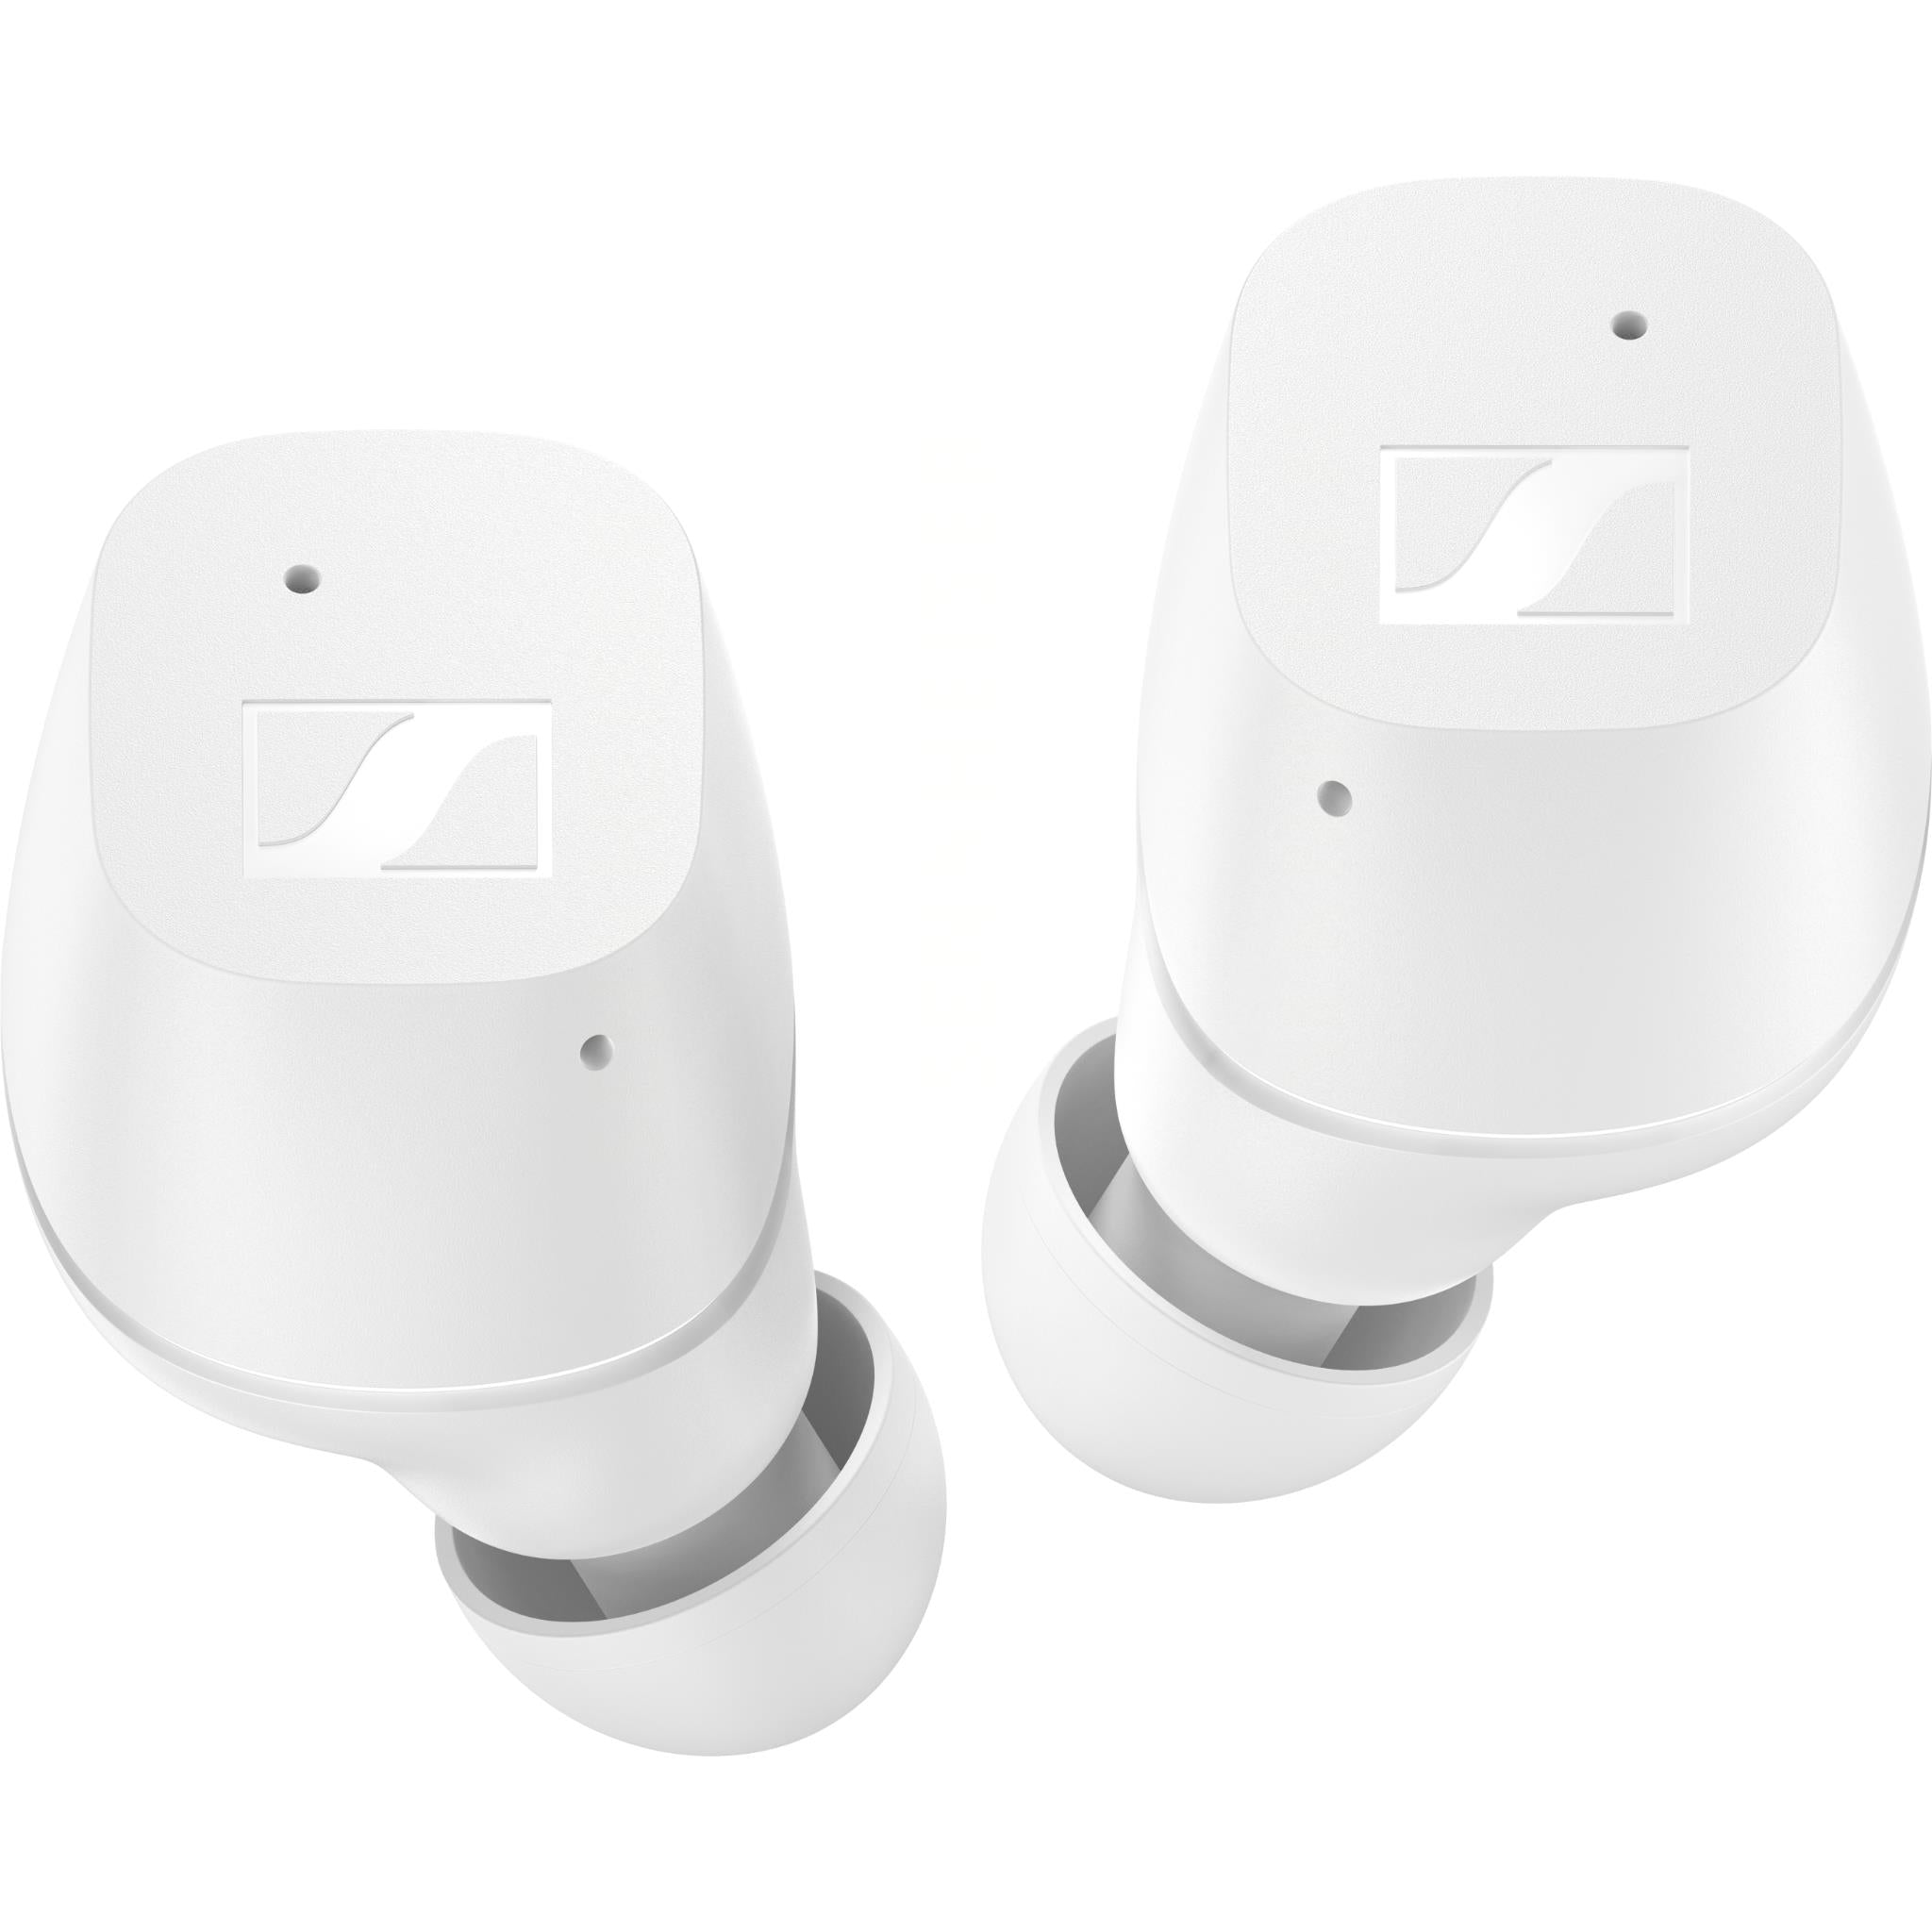 sennheiser cx true wireless in-ear headphones (white)